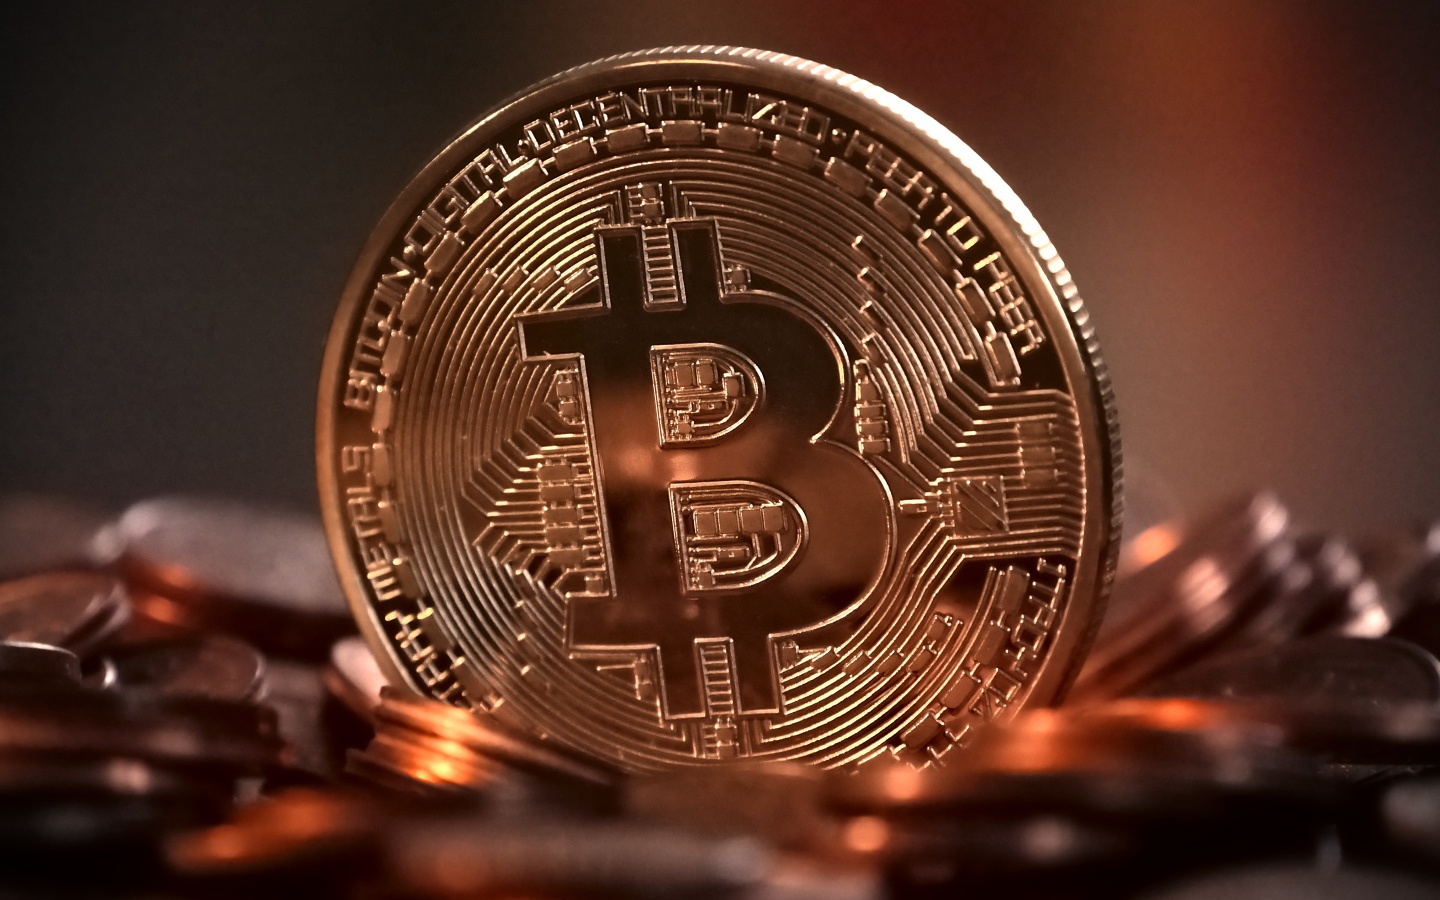 Gold expensive bitcoin coin close up